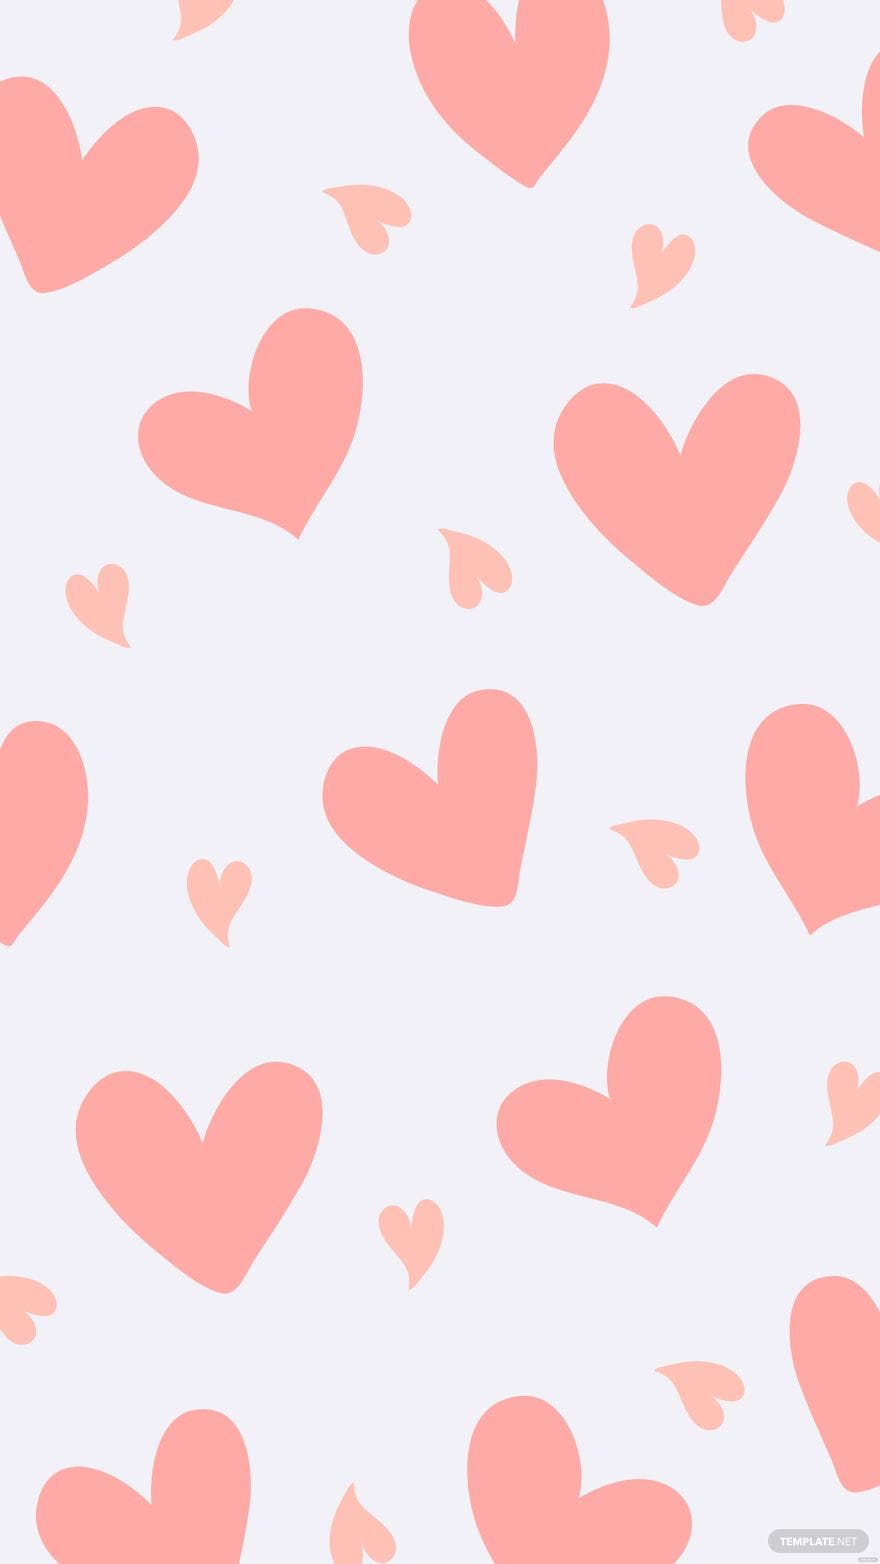 Free Pink Heart Background, Illustrator, JPG, SVG